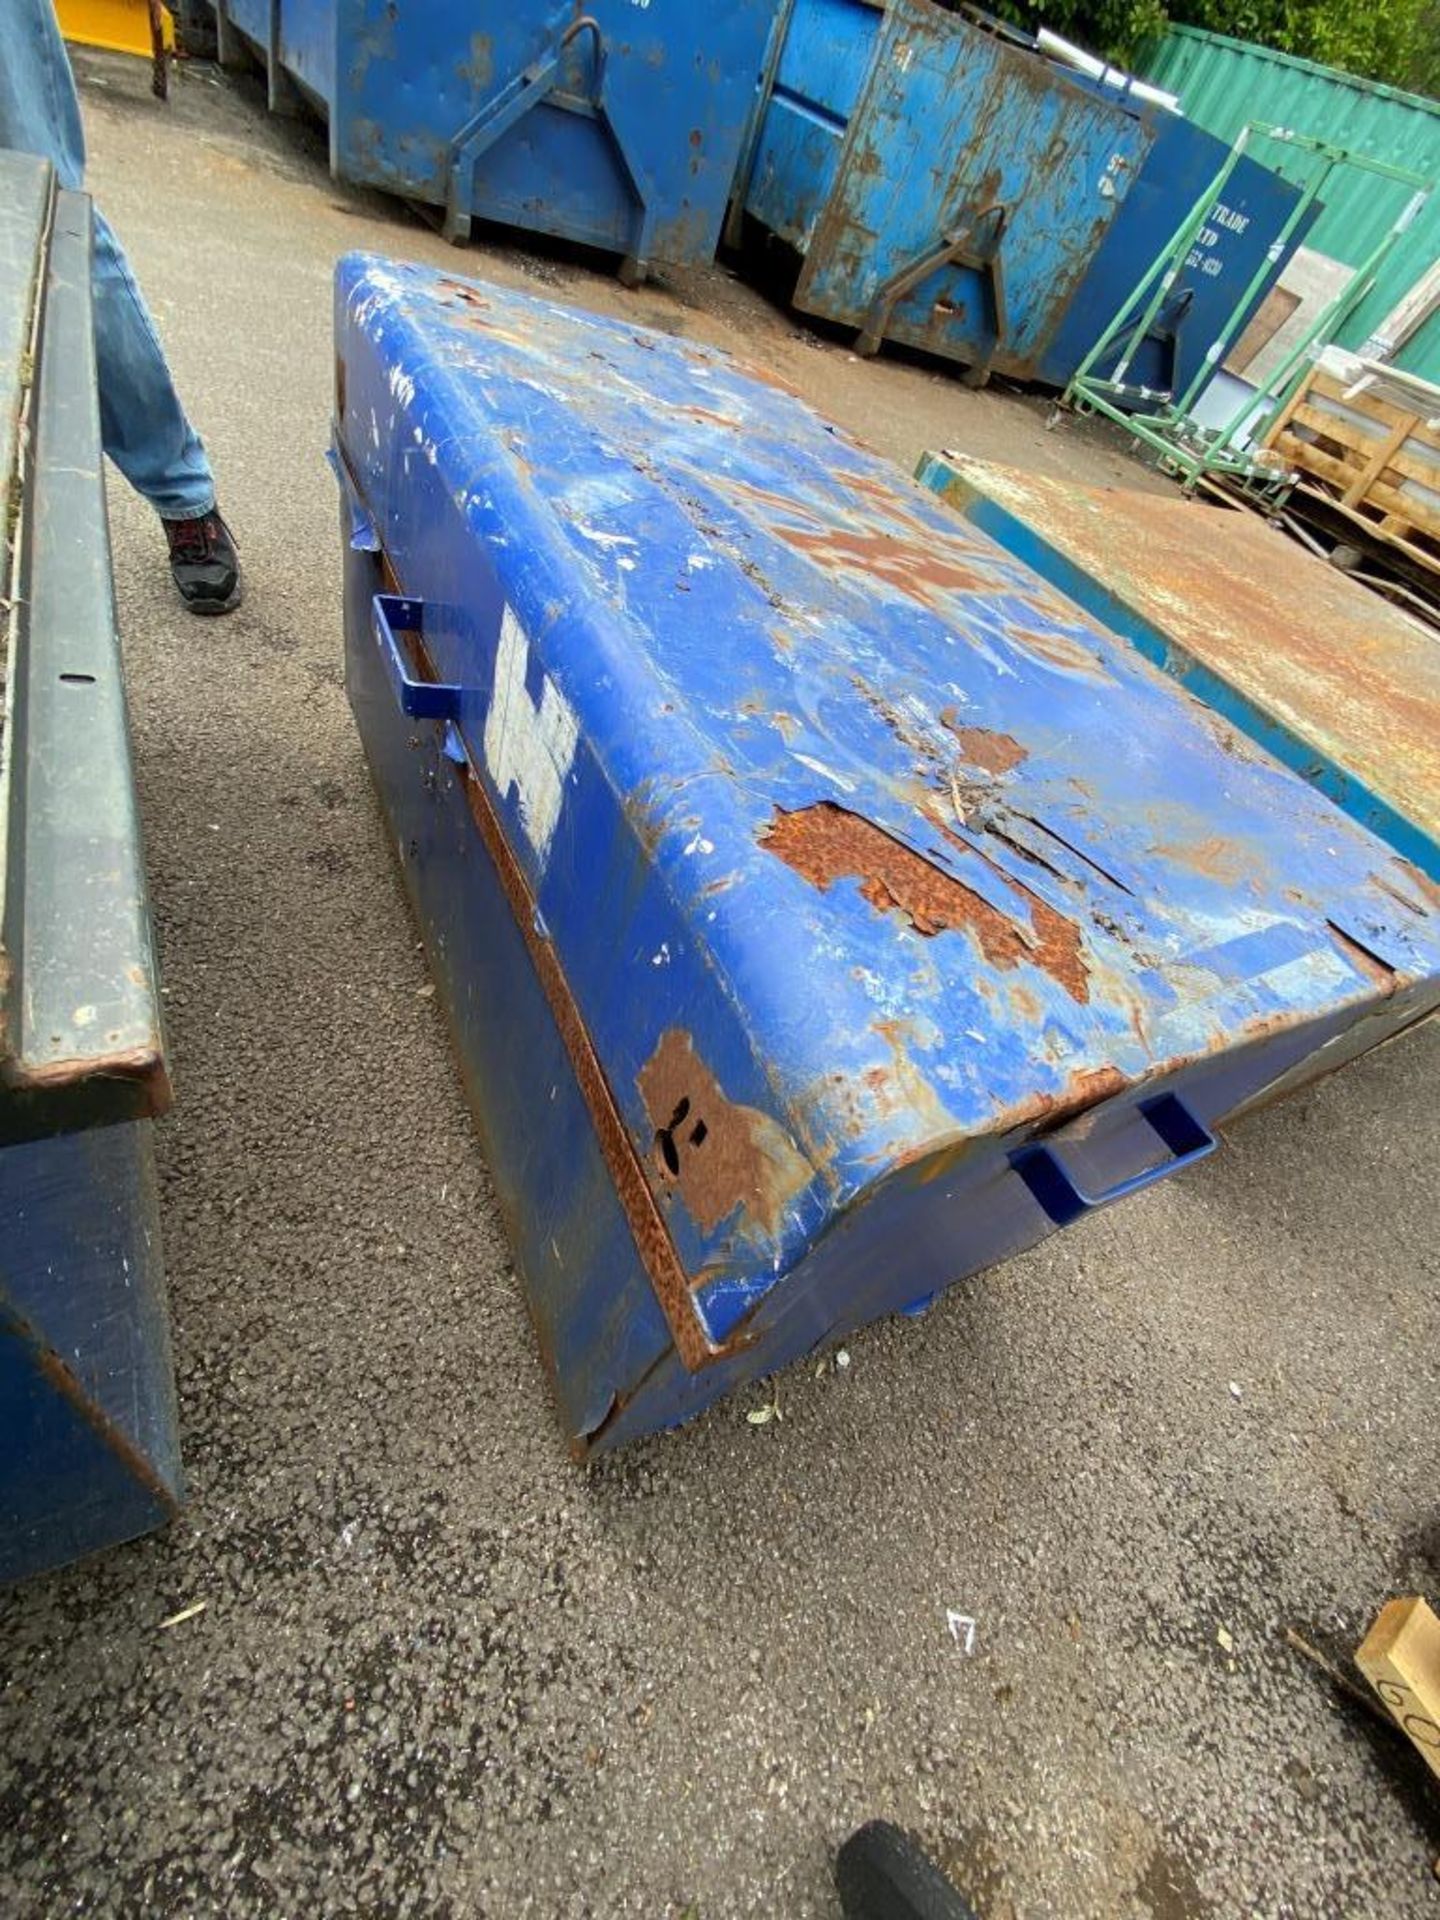 Steel site box on wheels (no key) 125cm x 65cm x 60cm, lid does not open - Image 2 of 2